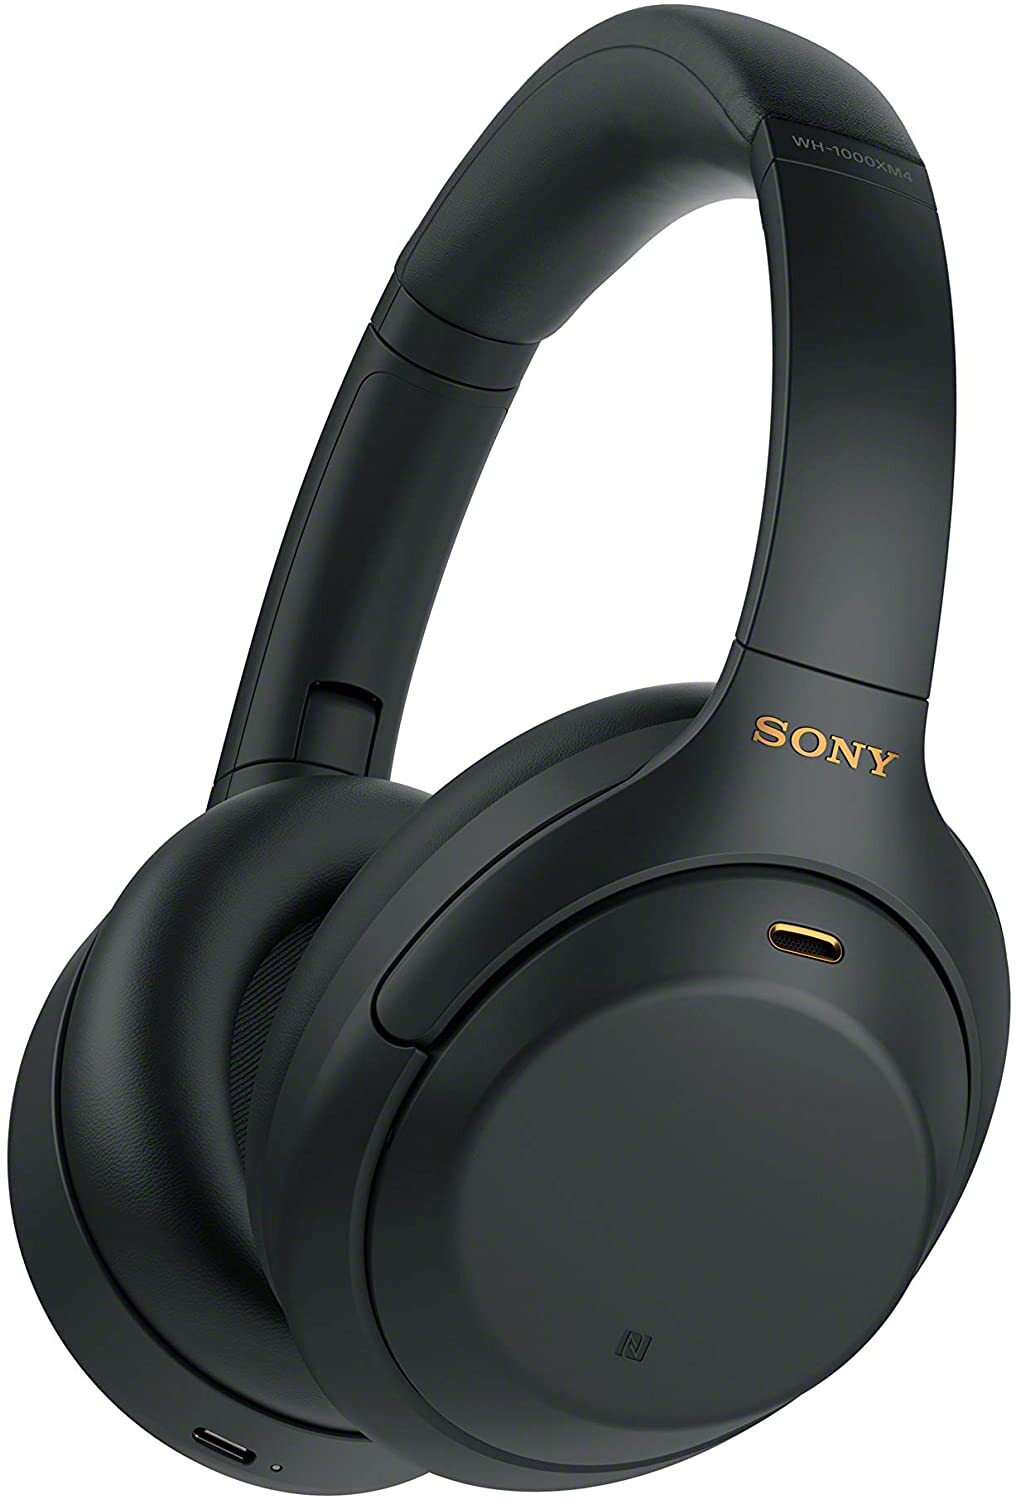 Buy Sony WH-1000XM4 Wireless Noise-Canceling Headphones online in ...